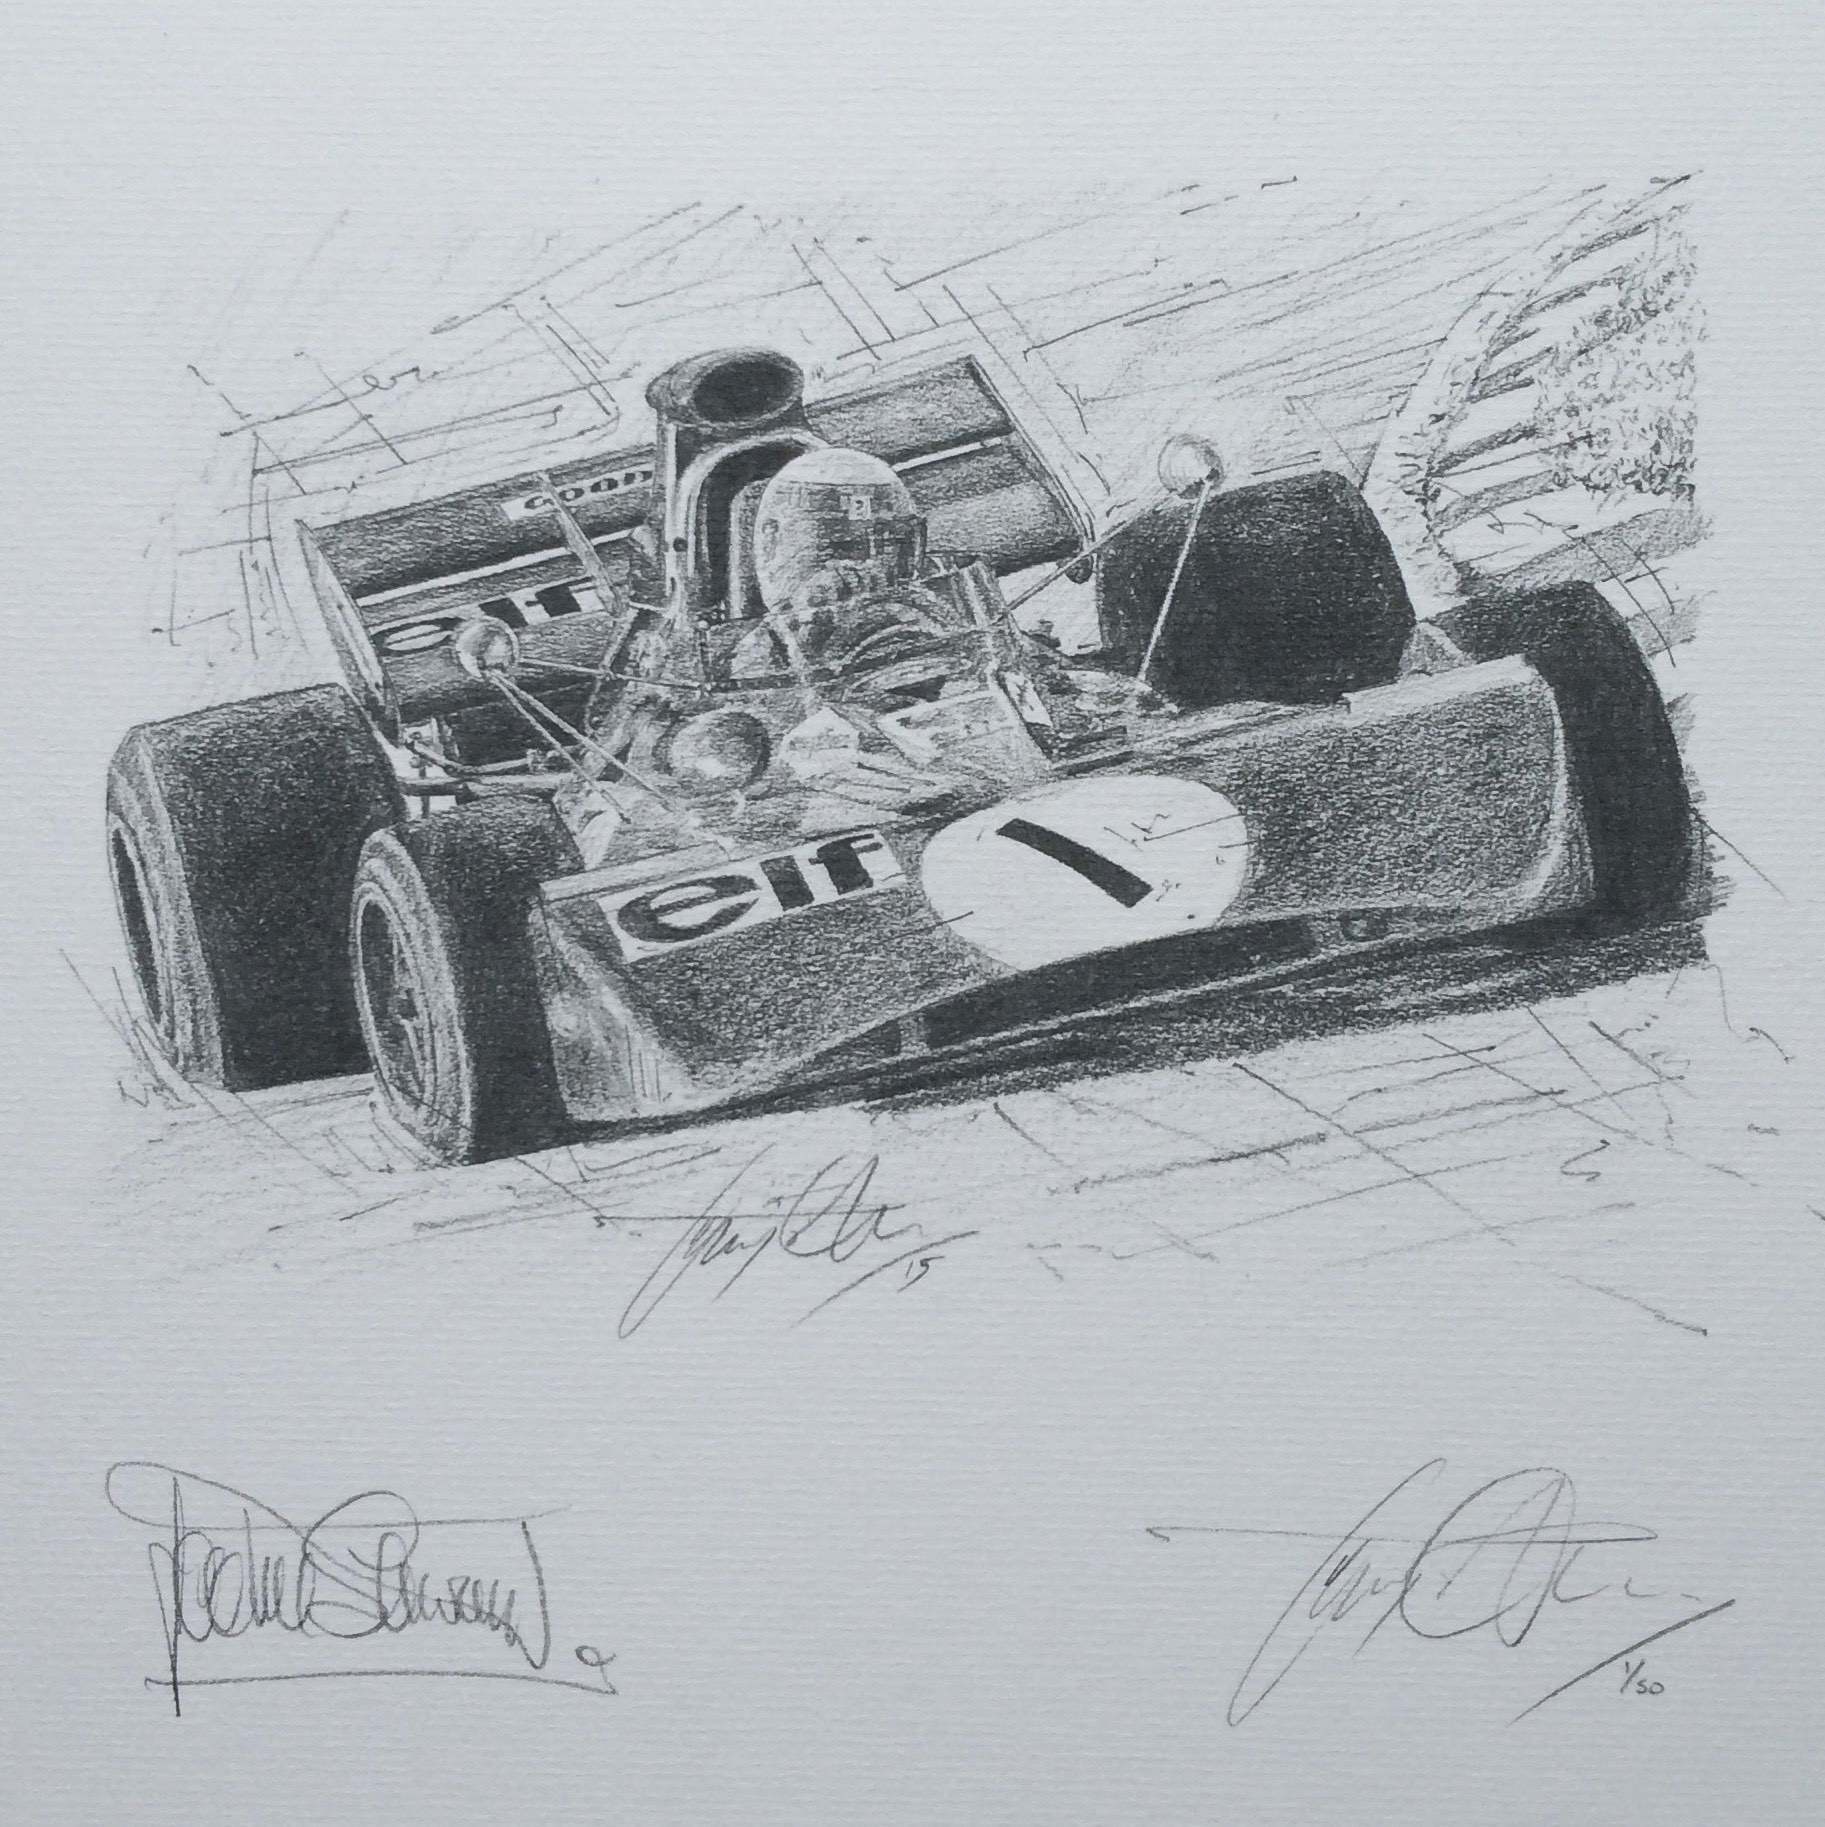 f1 car drawing